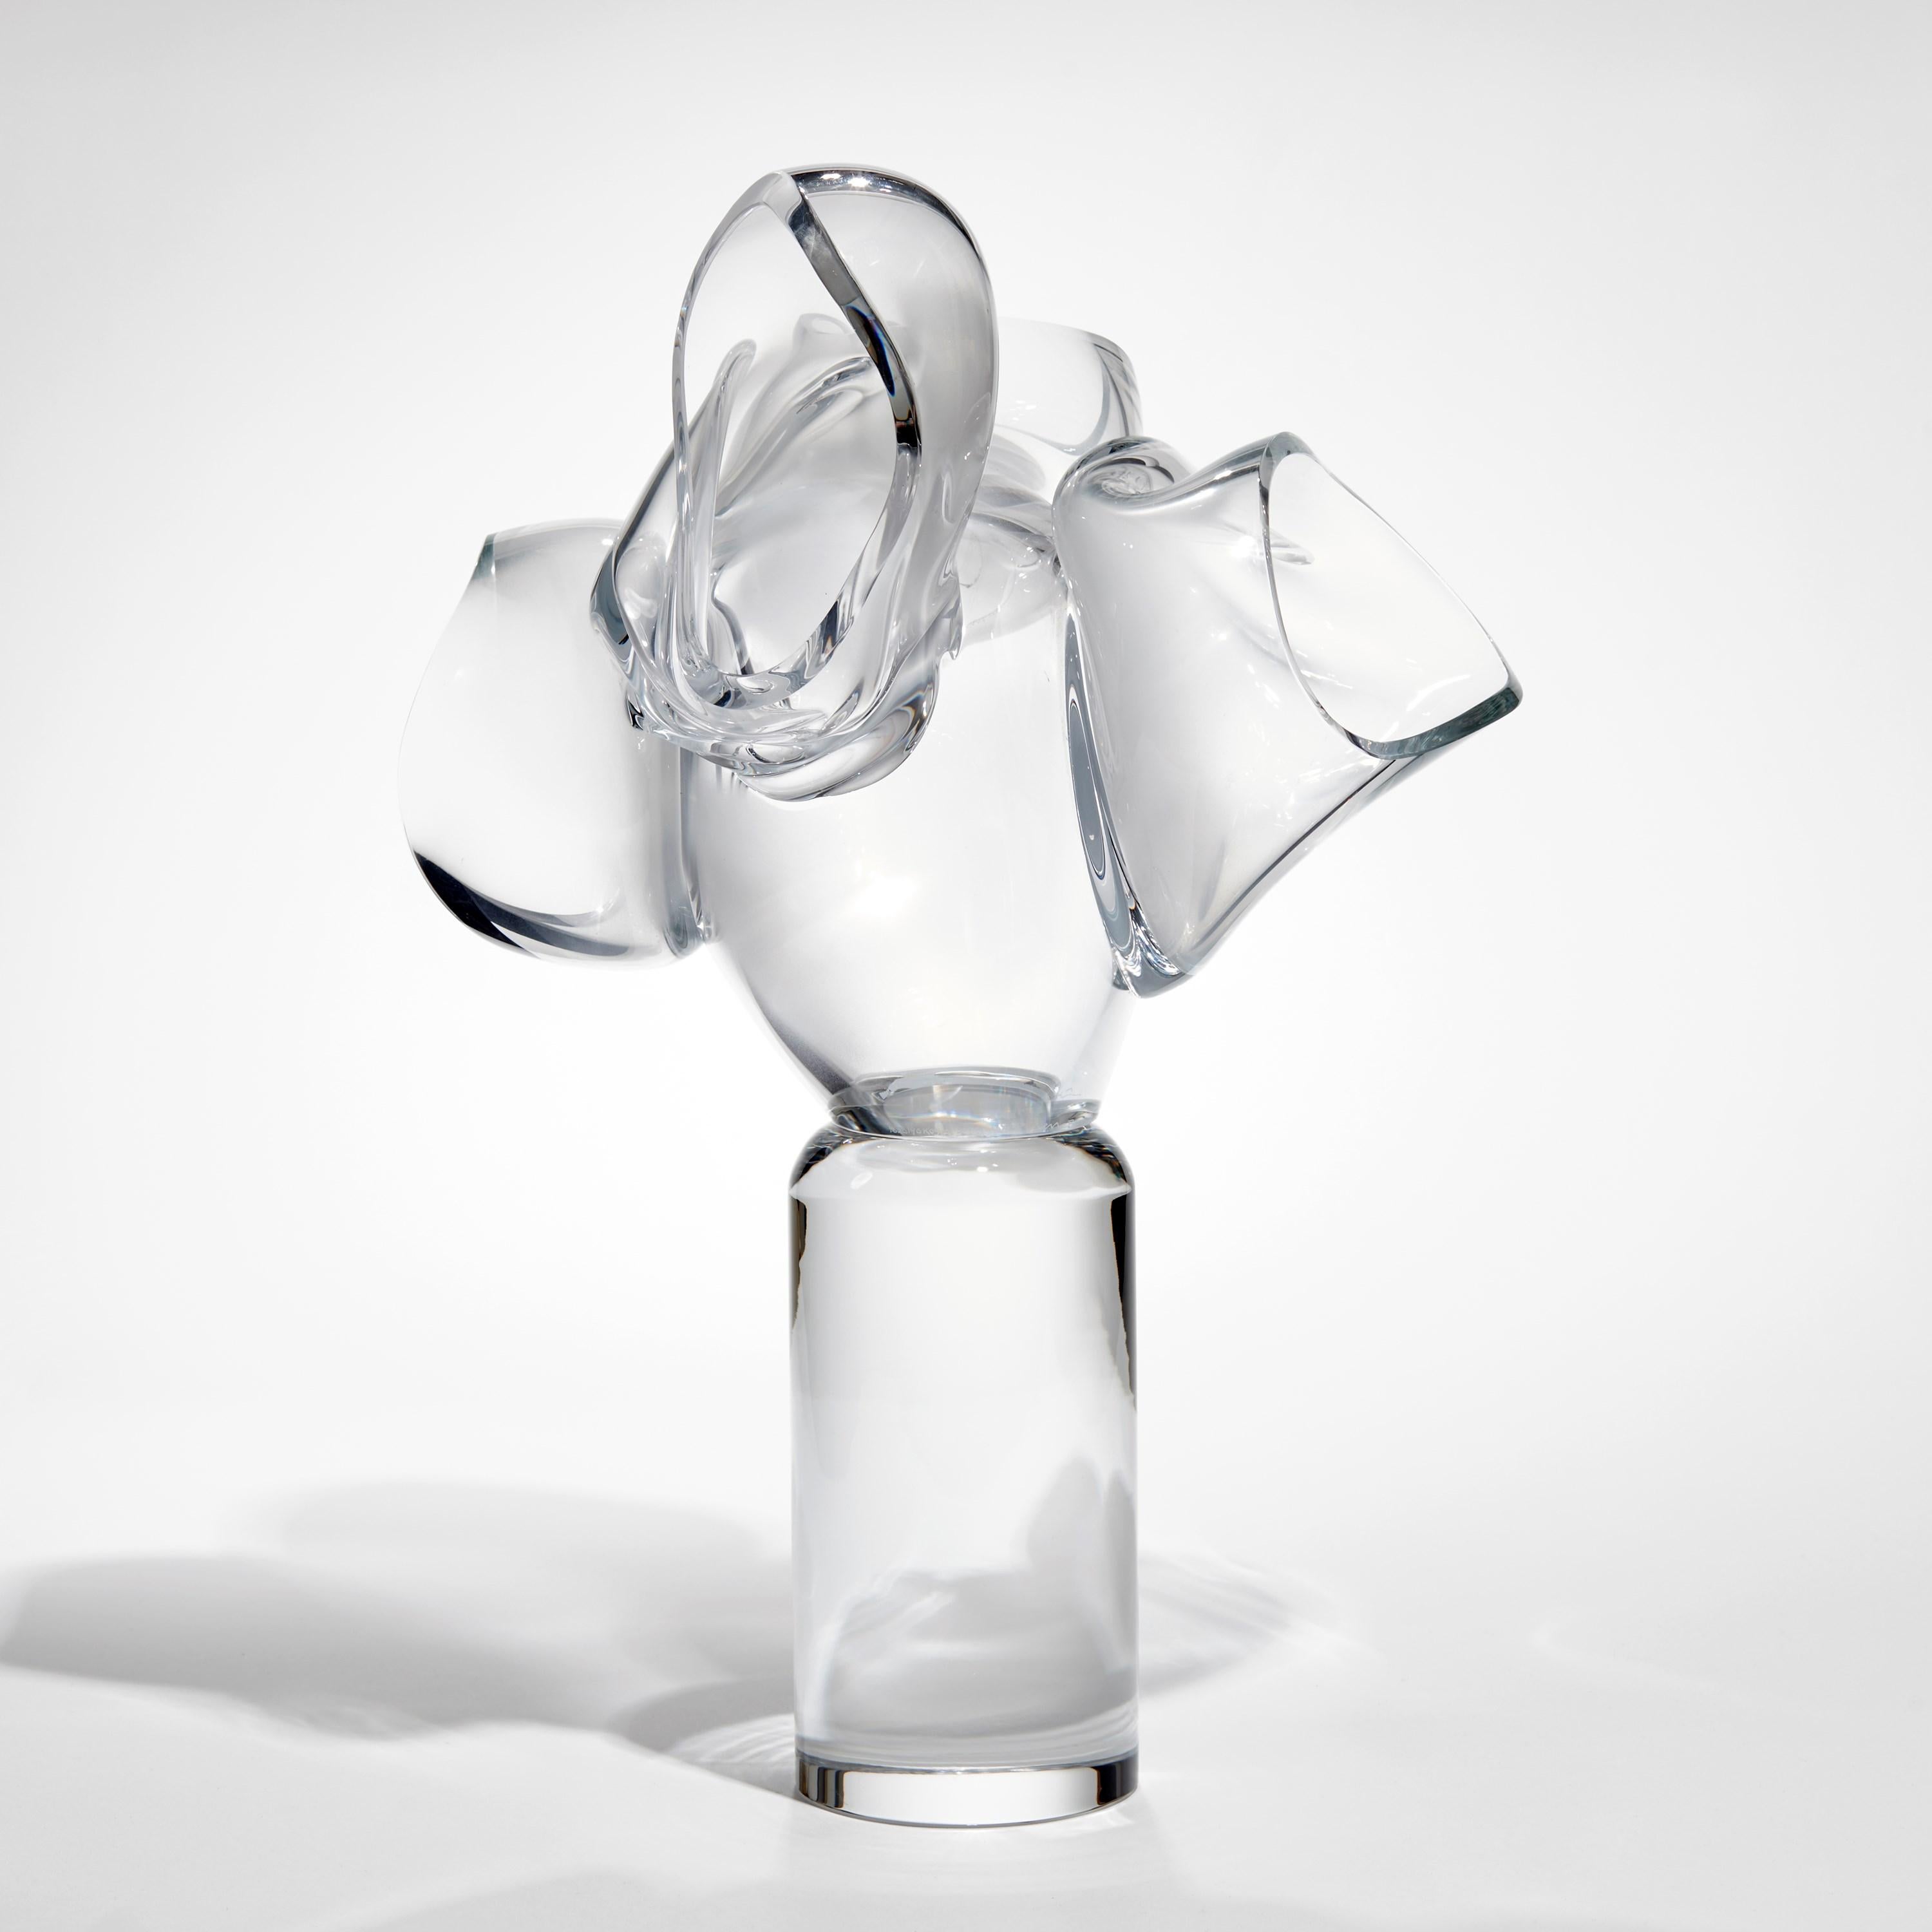 Organic Modern Heart Flower in Clear & Frost, a Sculpted Glass Artwork by Lena Bergström